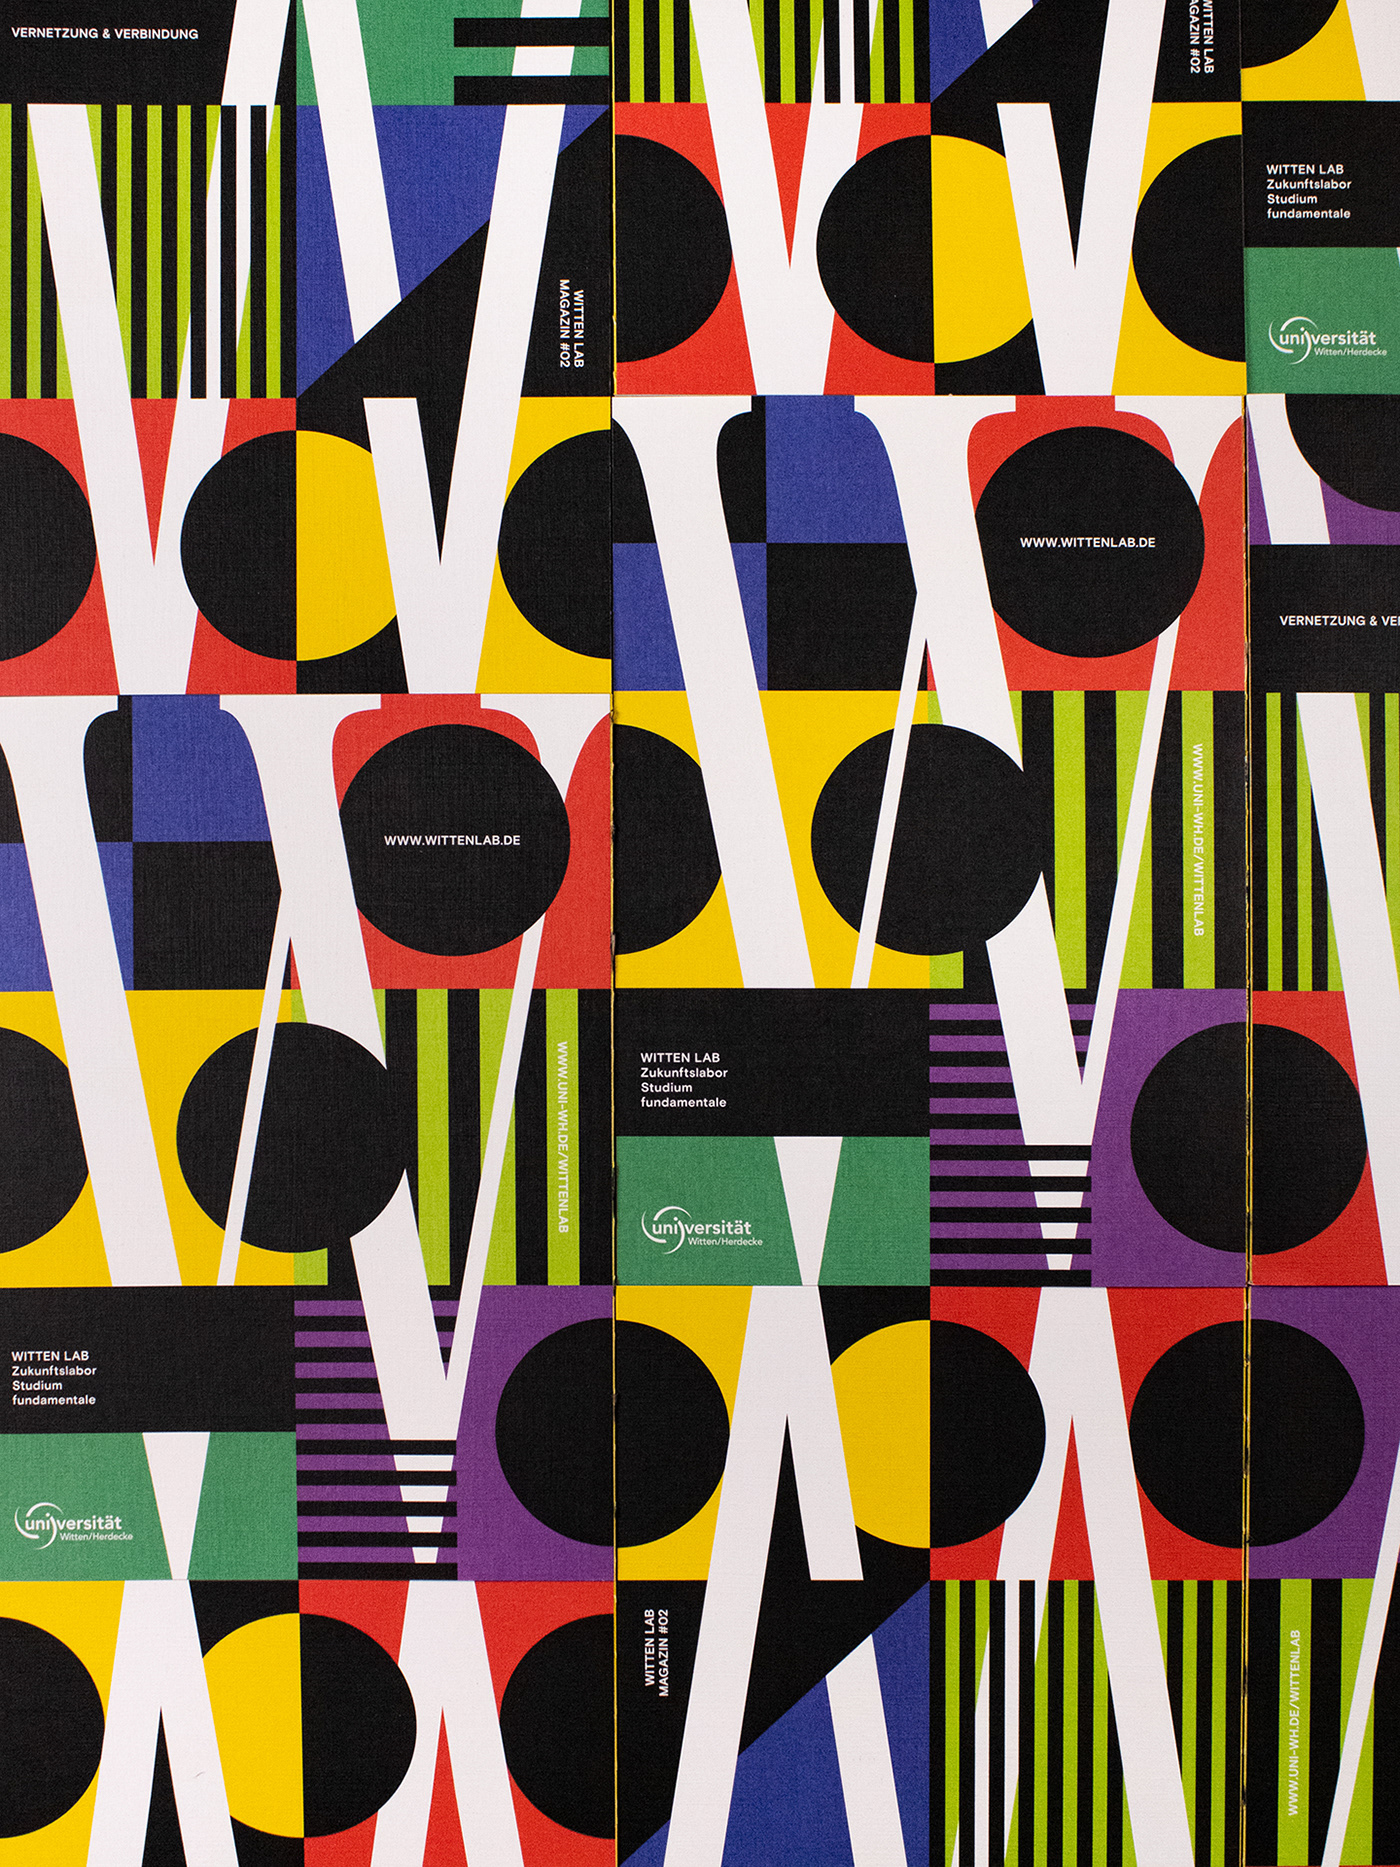 colour colourblock design editorial design  graphic design  Layout magazine print design  typography  